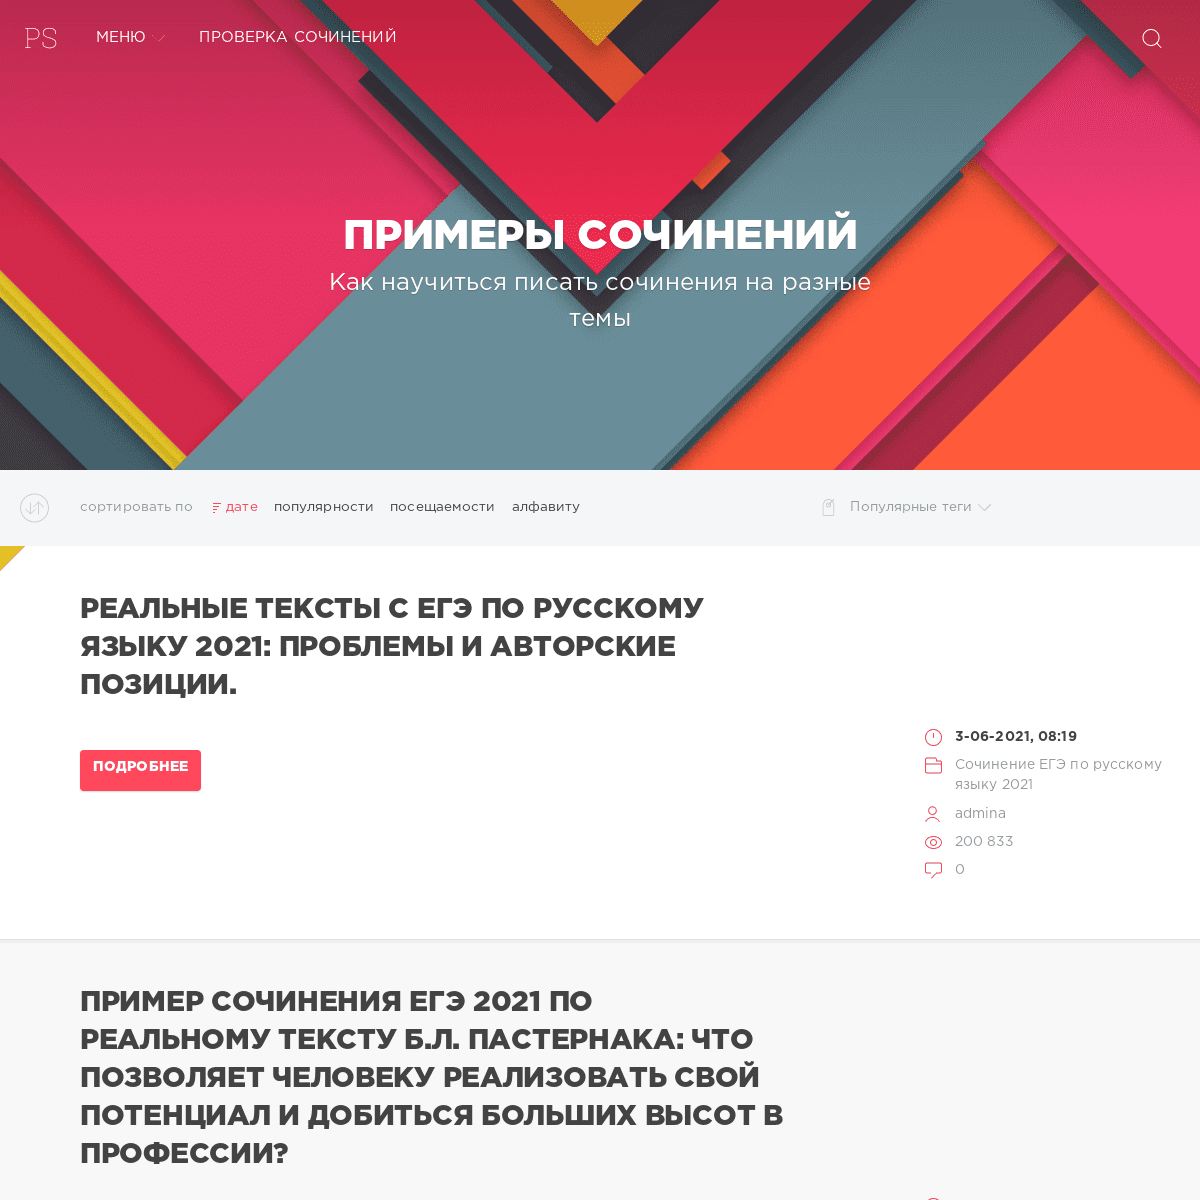 A complete backup of https://primersoch.ru